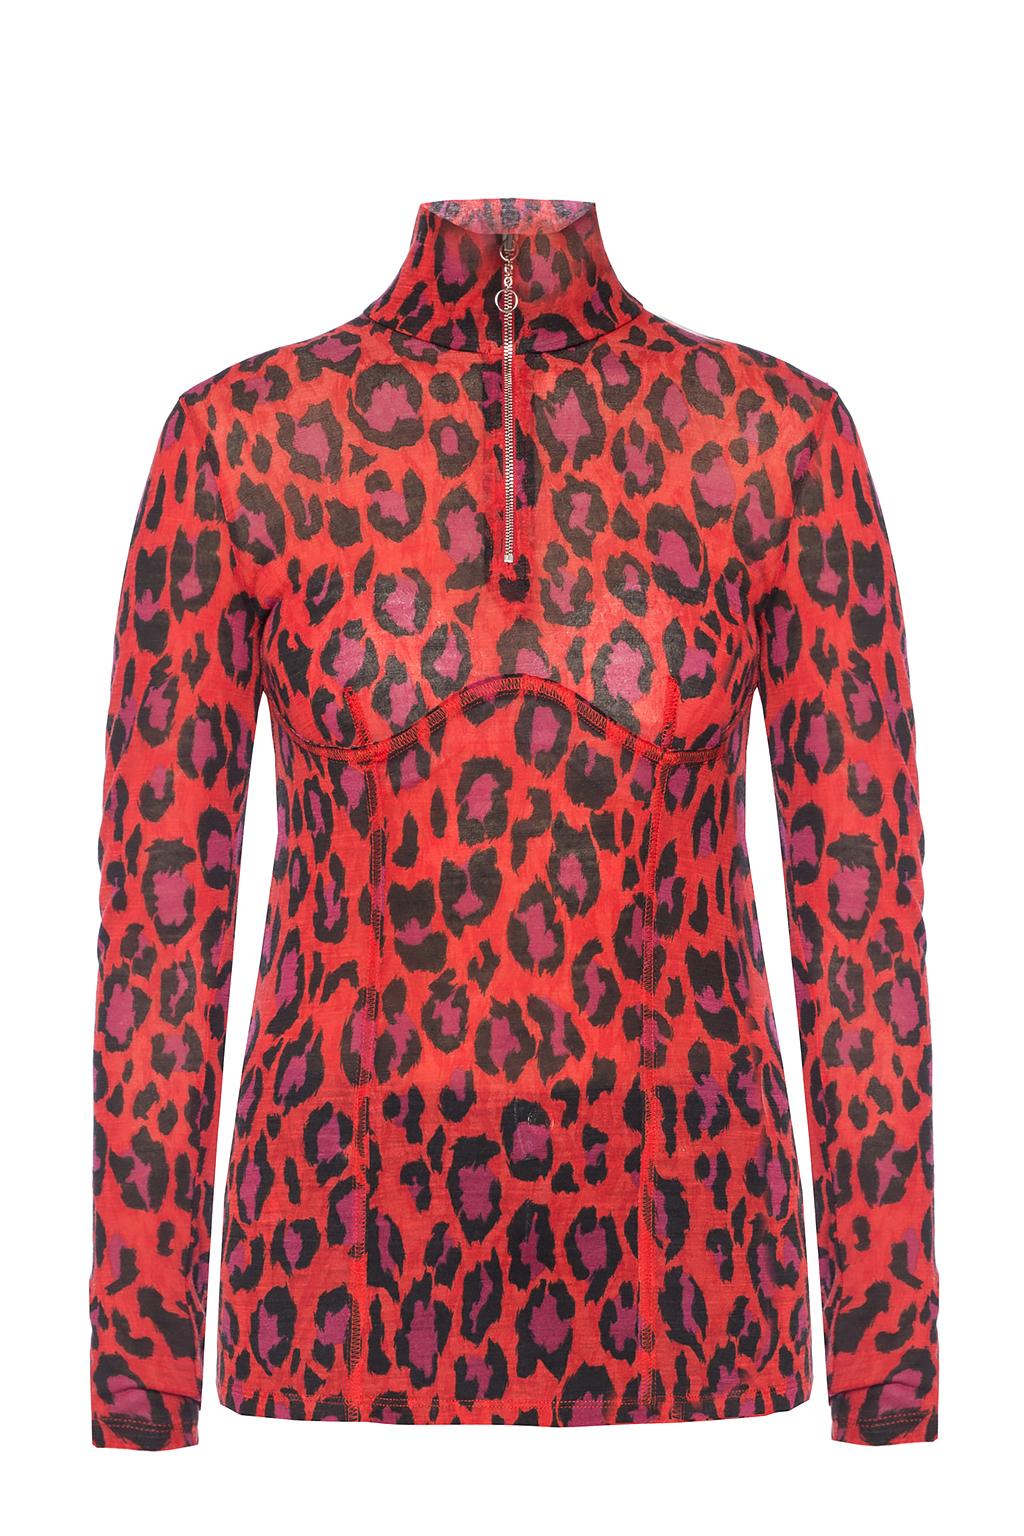 kenzo leopard print coat